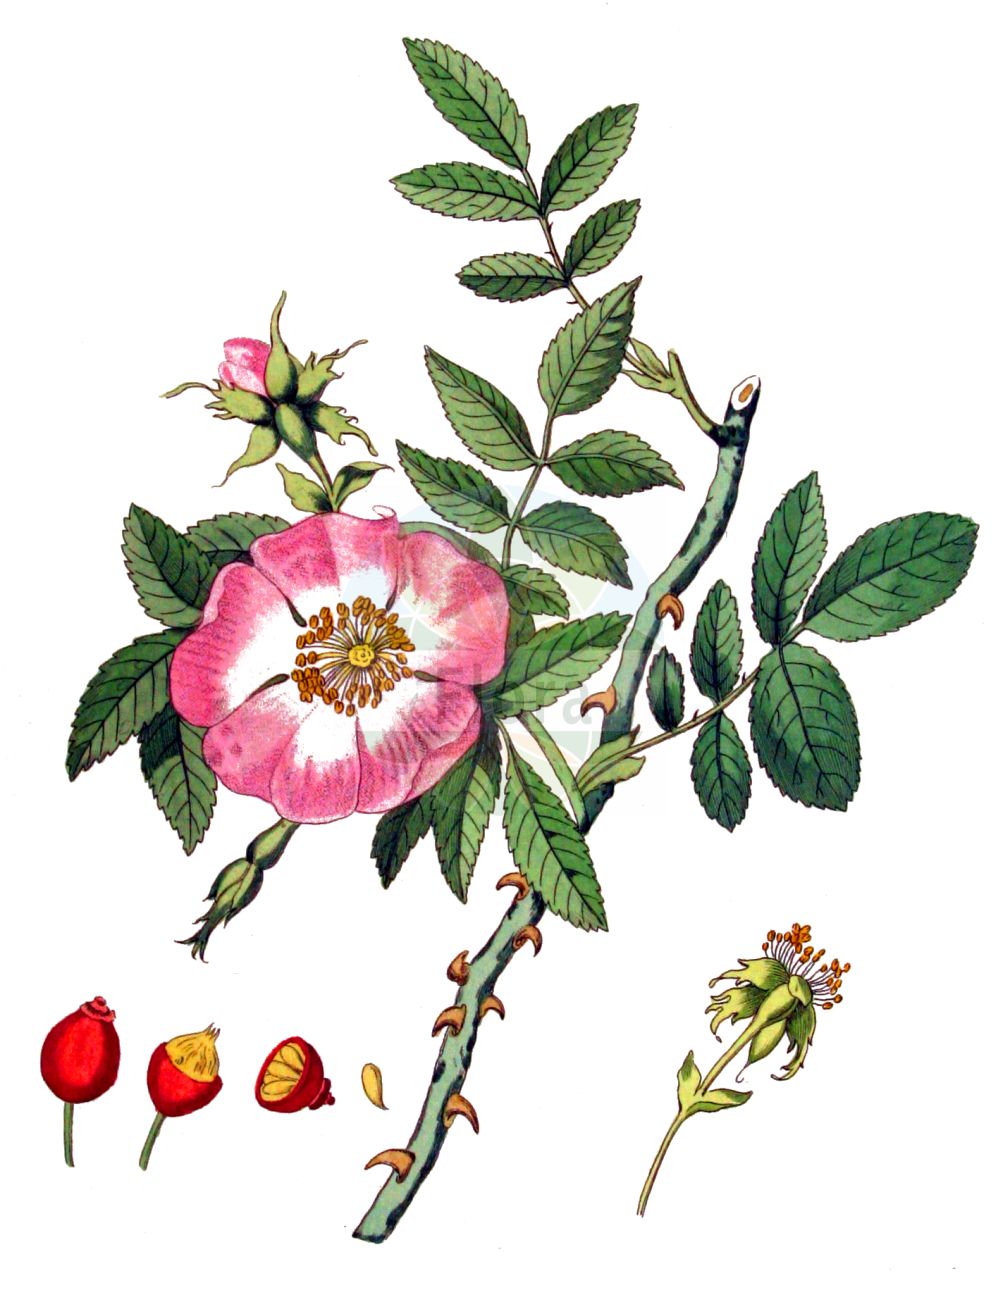 Historische Abbildung von Rosa canina (Hundsrose - Dog-rose). Das Bild zeigt Blatt, Bluete, Frucht und Same. ---- Historical Drawing of Rosa canina (Hundsrose - Dog-rose). The image is showing leaf, flower, fruit and seed.(Rosa canina,Hundsrose,Dog-rose,Crepinia aciphylla,Crepinia andegavensis,Crepinia canina,Crepinia psilophylla,Crepinia squarrosa,Rosa achburensis,Rosa aciphylla,Rosa actinodroma,Rosa adenocalyx,Rosa adscita,Rosa afzeliana,Rosa agraria,Rosa albolutescens,Rosa amansii,Rosa ambigua,Rosa analoga,Rosa andegavensis,Rosa arguta,Rosa armata,Rosa armoricana,Rosa aspernata,Rosa aspratilis,Rosa belgradensis,Rosa biebersteiniana,Rosa blondeauana,Rosa bujedana,Rosa calvatostyla,Rosa calycina,Rosa cariotii,Rosa catalaunica,Rosa caucasea,Rosa caucasica,Rosa chaboissaei,Rosa ciliatosepala,Rosa cladoleia,Rosa condensata,Rosa controversa,Rosa curticola,Rosa desvauxii,Rosa didoensis,Rosa dilucida,Rosa disparilis,Rosa dollineriana,Rosa dolosa,Rosa dumosa,Rosa edita,Rosa eriostyla,Rosa exilis,Rosa fallax,Rosa fallens,Rosa firma,Rosa firmula,Rosa fissispina,Rosa flavidifolia,Rosa flexibilis,Rosa fraxinoides,Rosa frivaldskyi,Rosa frondosa,Rosa generalis,Rosa glaberrima,Rosa glaucina,Rosa globularis,Rosa haematodes,Rosa hirsuta,Rosa hirtella,Rosa horridula,Rosa inconspicua,Rosa intercedens,Rosa laxifolia,Rosa leiostyla,Rosa lemaitrei,Rosa litigiosa,Rosa lonaczevskii,Rosa longituba,Rosa ludibunda,Rosa lutetiana,Rosa macroacantha,Rosa macrostylis,Rosa maeotica,Rosa mandonii,Rosa marisensis,Rosa mediata,Rosa medioxima,Rosa mollardiana,Rosa montivaga,Rosa mucronulata,Rosa myrtilloides,Rosa nemophila,Rosa nervulosa,Rosa nitens,Rosa novella,Rosa oblonga,Rosa oblongata,Rosa occulta,Rosa oenensis,Rosa ololeia,Rosa oreades,Rosa penchinatii,Rosa polyodon,Rosa porrectidens,Rosa praeterita,Rosa pratincola,Rosa prutensis,Rosa psilophylla,Rosa pubens,Rosa ramosissima,Rosa raui,Rosa reboudiana,Rosa retusa,Rosa rorida,Rosa rougeonensis,Rosa rubelliflora,Rosa rubescens,Rosa sarmentacea,Rosa saxatilis,Rosa sazilliacensis,Rosa scabrata,Rosa semiglandulosa,Rosa senticosa,Rosa separabilis,Rosa sepium,Rosa seposita,Rosa simplicidens,Rosa slobodjanii,Rosa sosnowskyi,Rosa sphaerica,Rosa sphaeroidea,Rosa spuria,Rosa squarrosa,Rosa stenocarpa,Rosa stipularis,Rosa subertii,Rosa superba,Rosa sylvularum,Rosa syntrichostyla,Rosa systylomorpha,Rosa timbaliana,Rosa touranginiana,Rosa transsilvanica,Rosa tyraica,Rosa verlotii,Rosa vinacea,Rosa vinealis,Rosa vinetorum,Rosa wettsteinii,Rosa canina,Hundsrose,Anjou-Hunds-Rose,Hunds-Rose,Dog-rose,Briar Rose,Common Briar,Rosa,Rose,Rose,Rosaceae,Rosengewächse,Rose family,Blatt,Bluete,Frucht,Same,leaf,flower,fruit,seed,Kops (1800-1934))